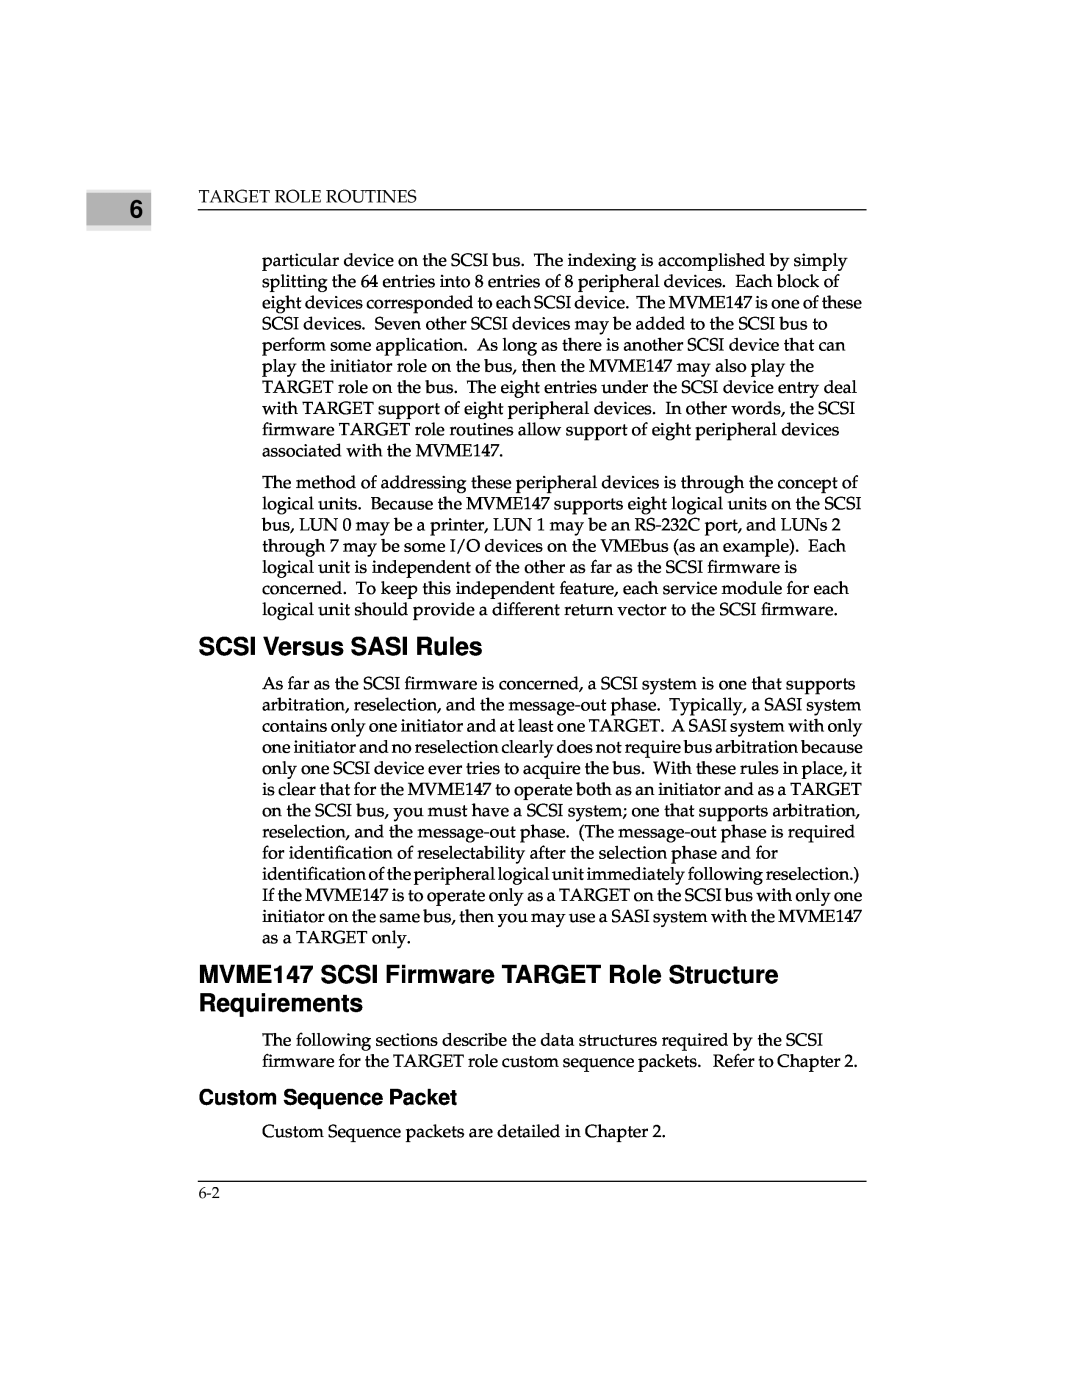 Emerson MVME147 manual SCSI Versus SASI Rules, Custom Sequence Packet 